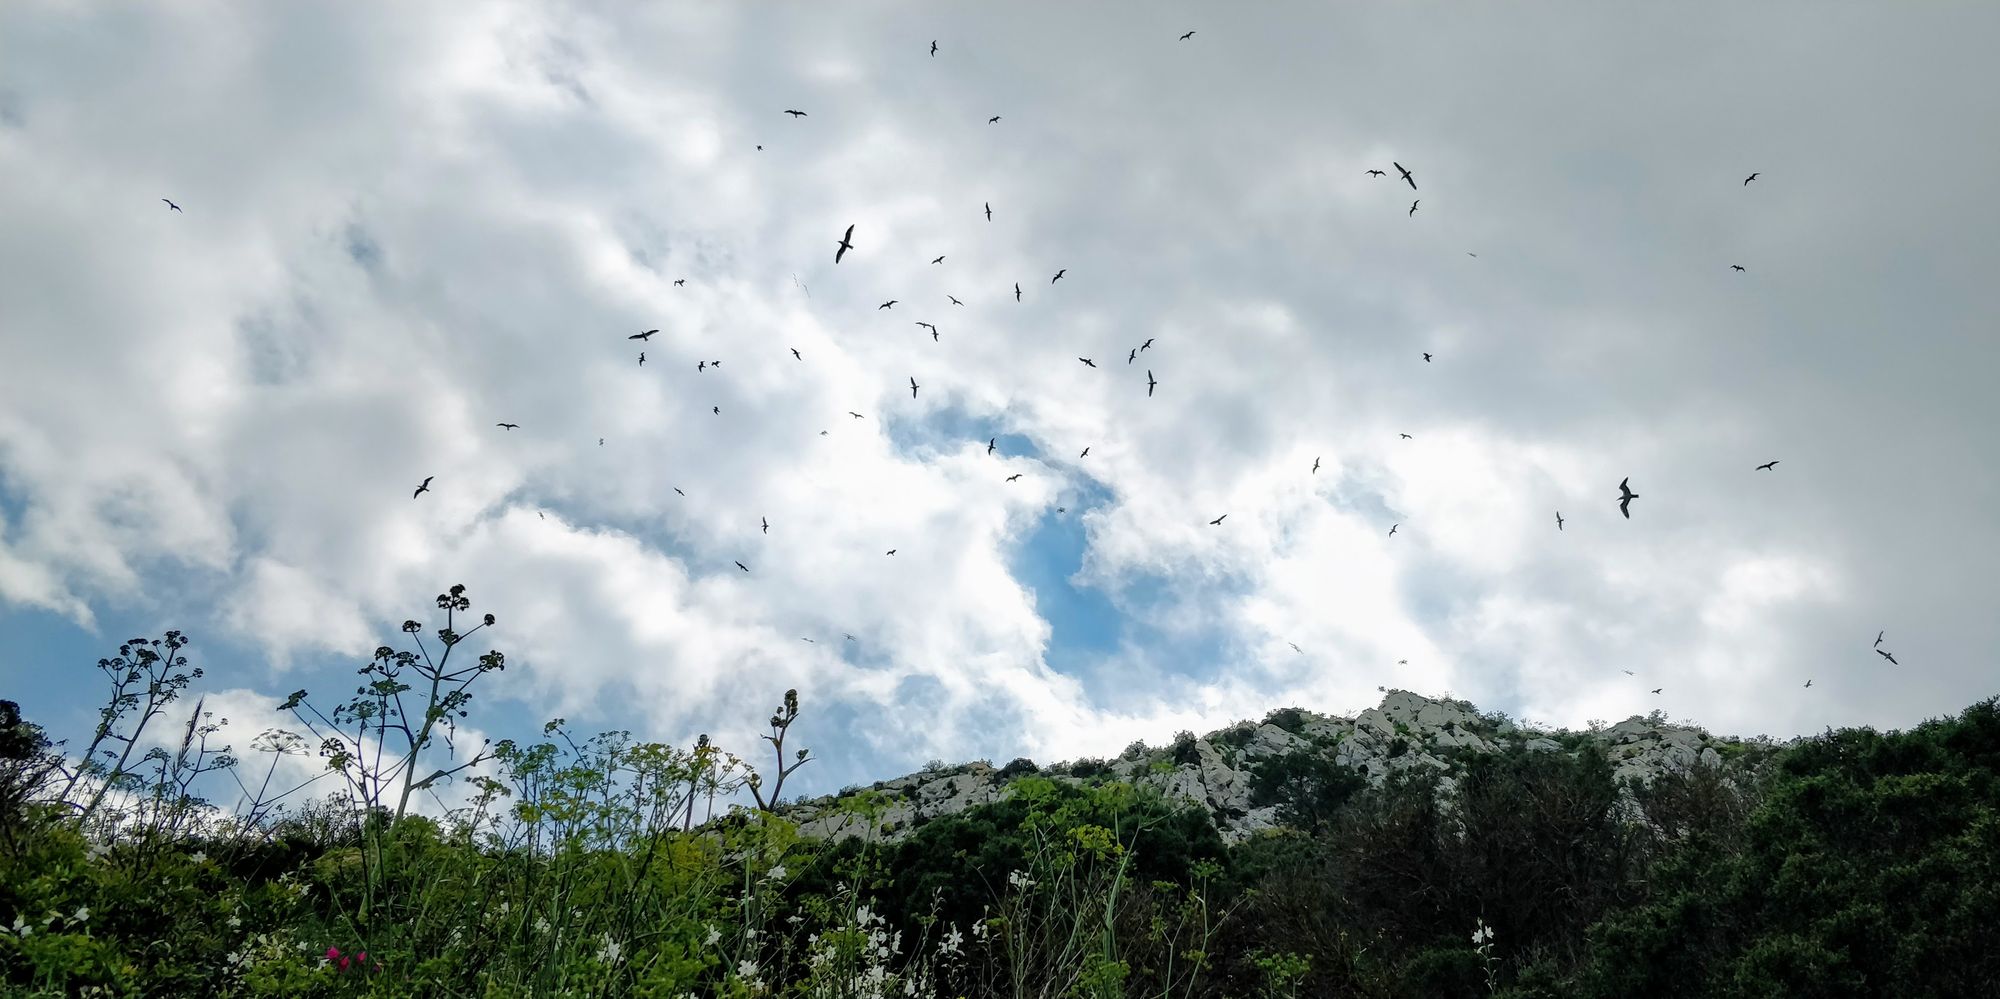 El Peñón de Ifach. Hiking Above Seagulls (Apr 2021)